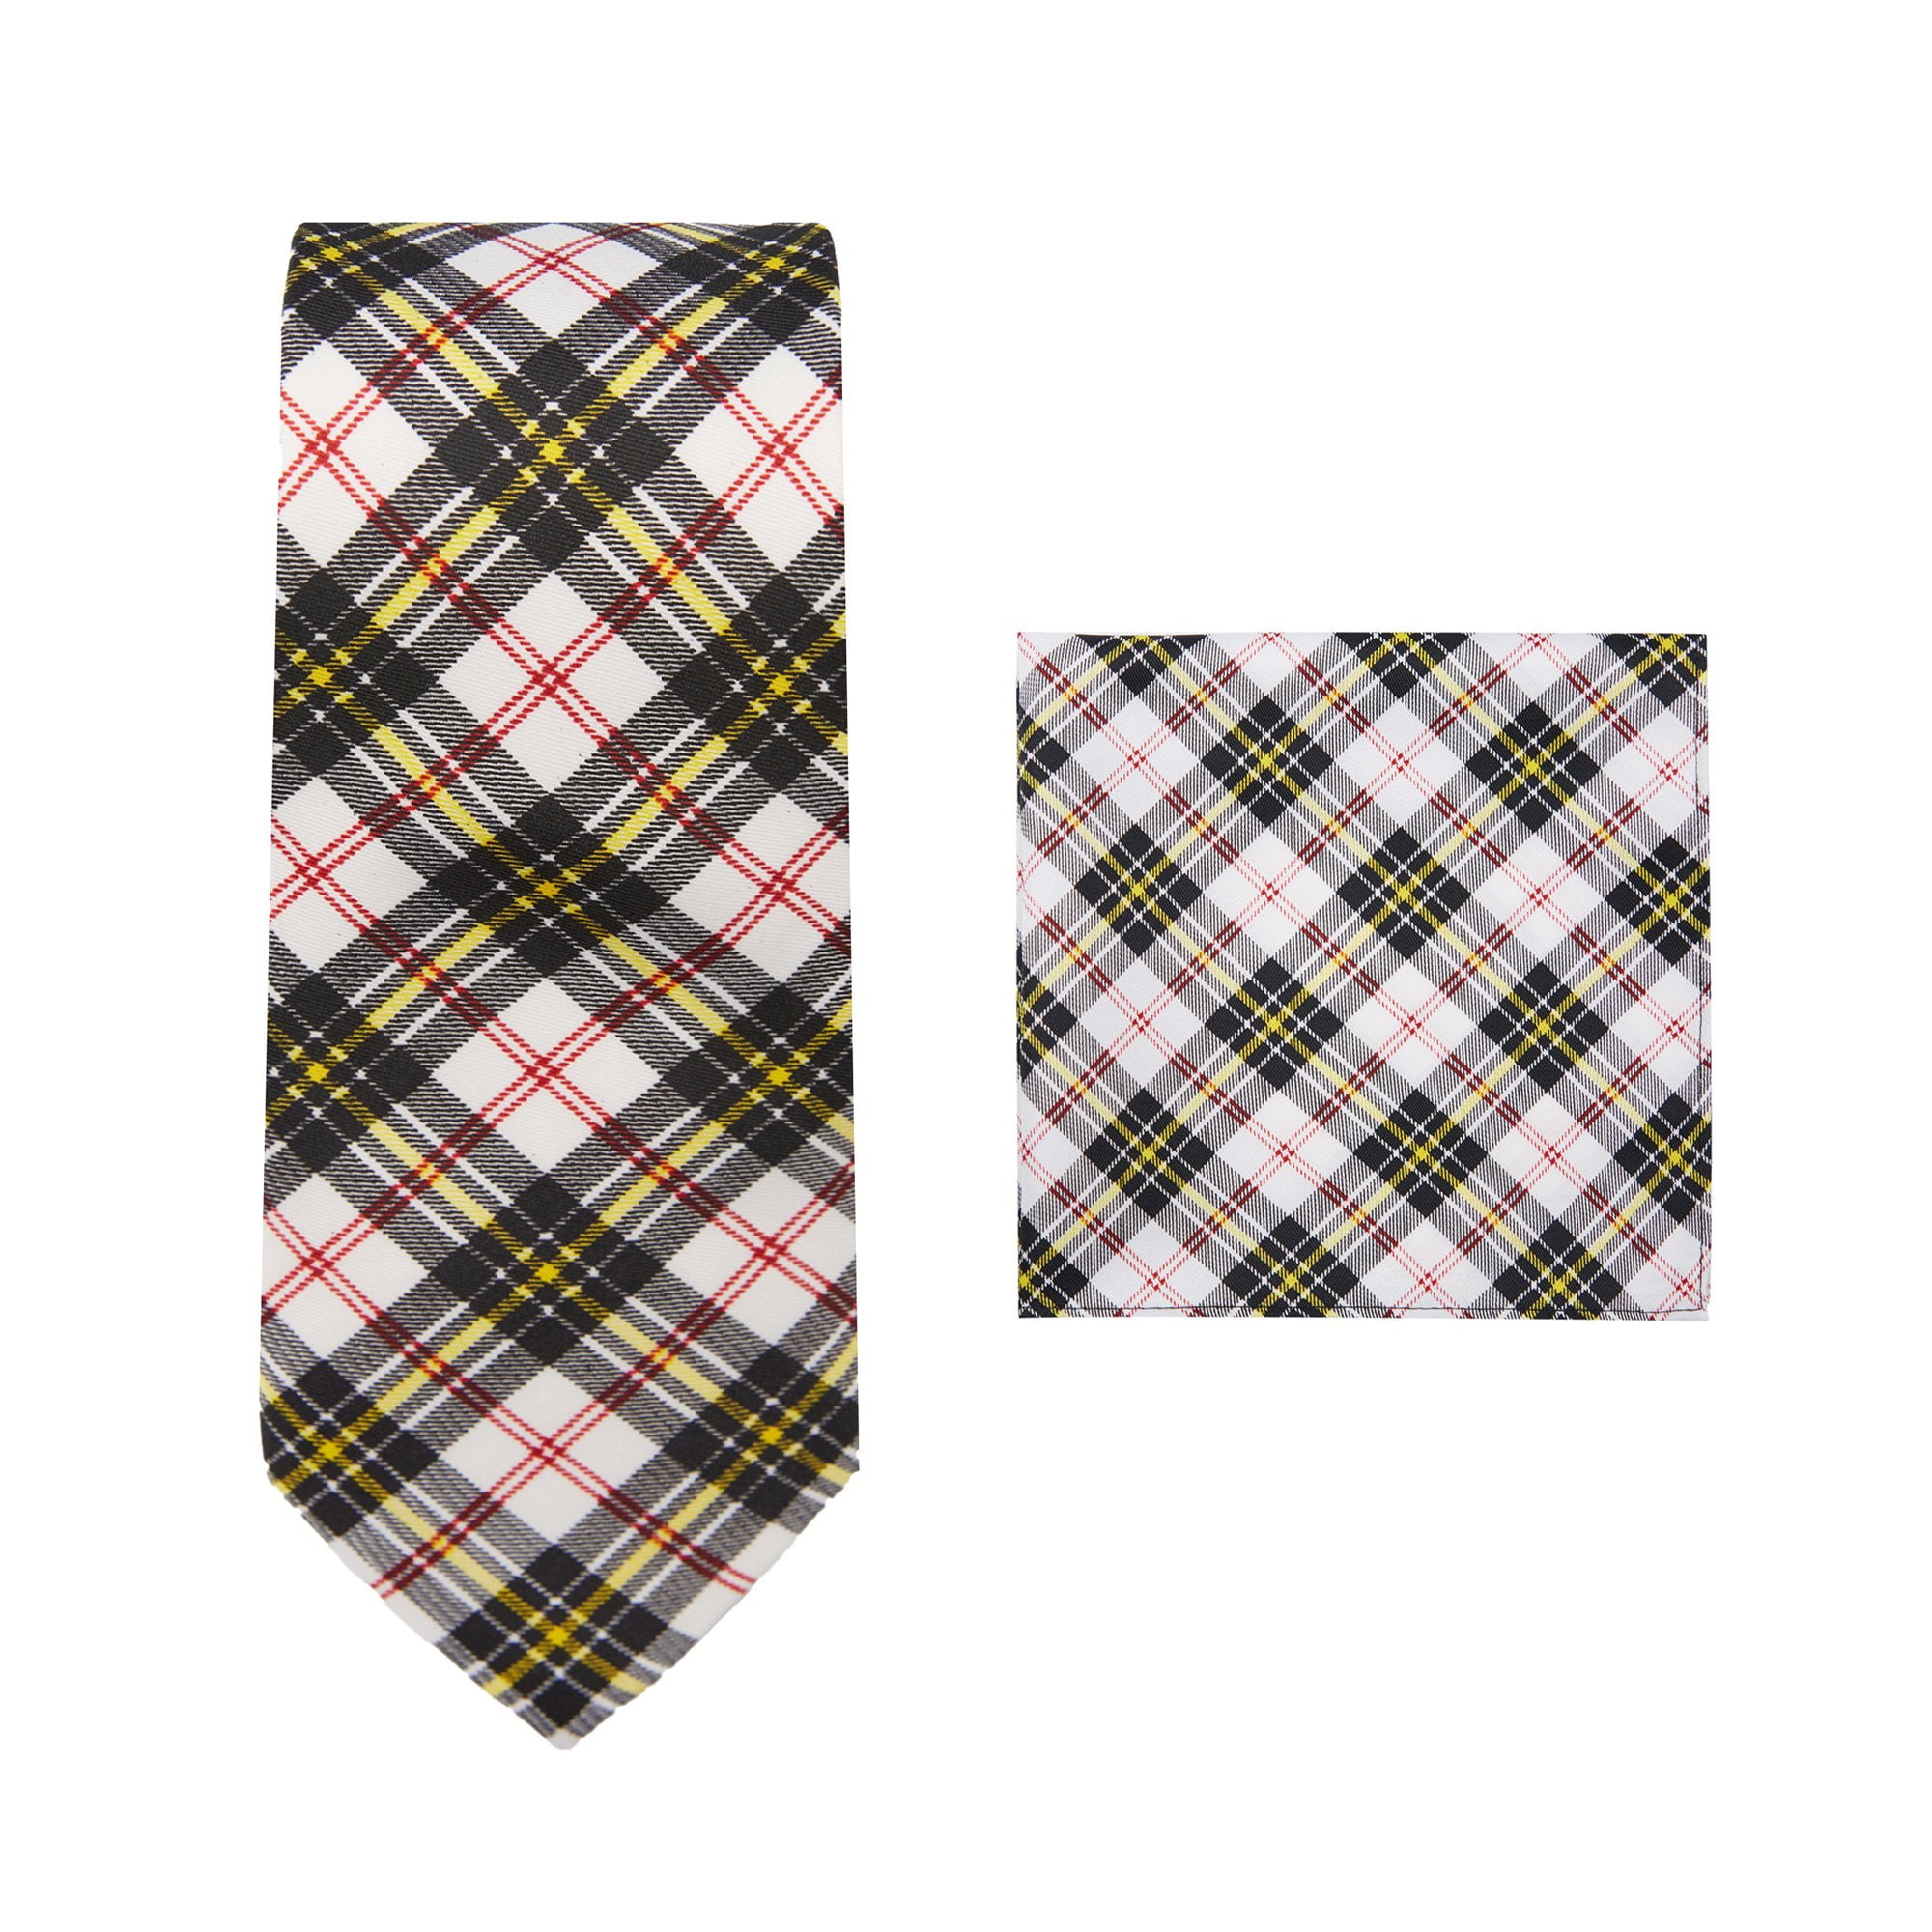 DQT Woven Tartan Plaid Formal Casual Necktie Wedding Classic Men's Tie